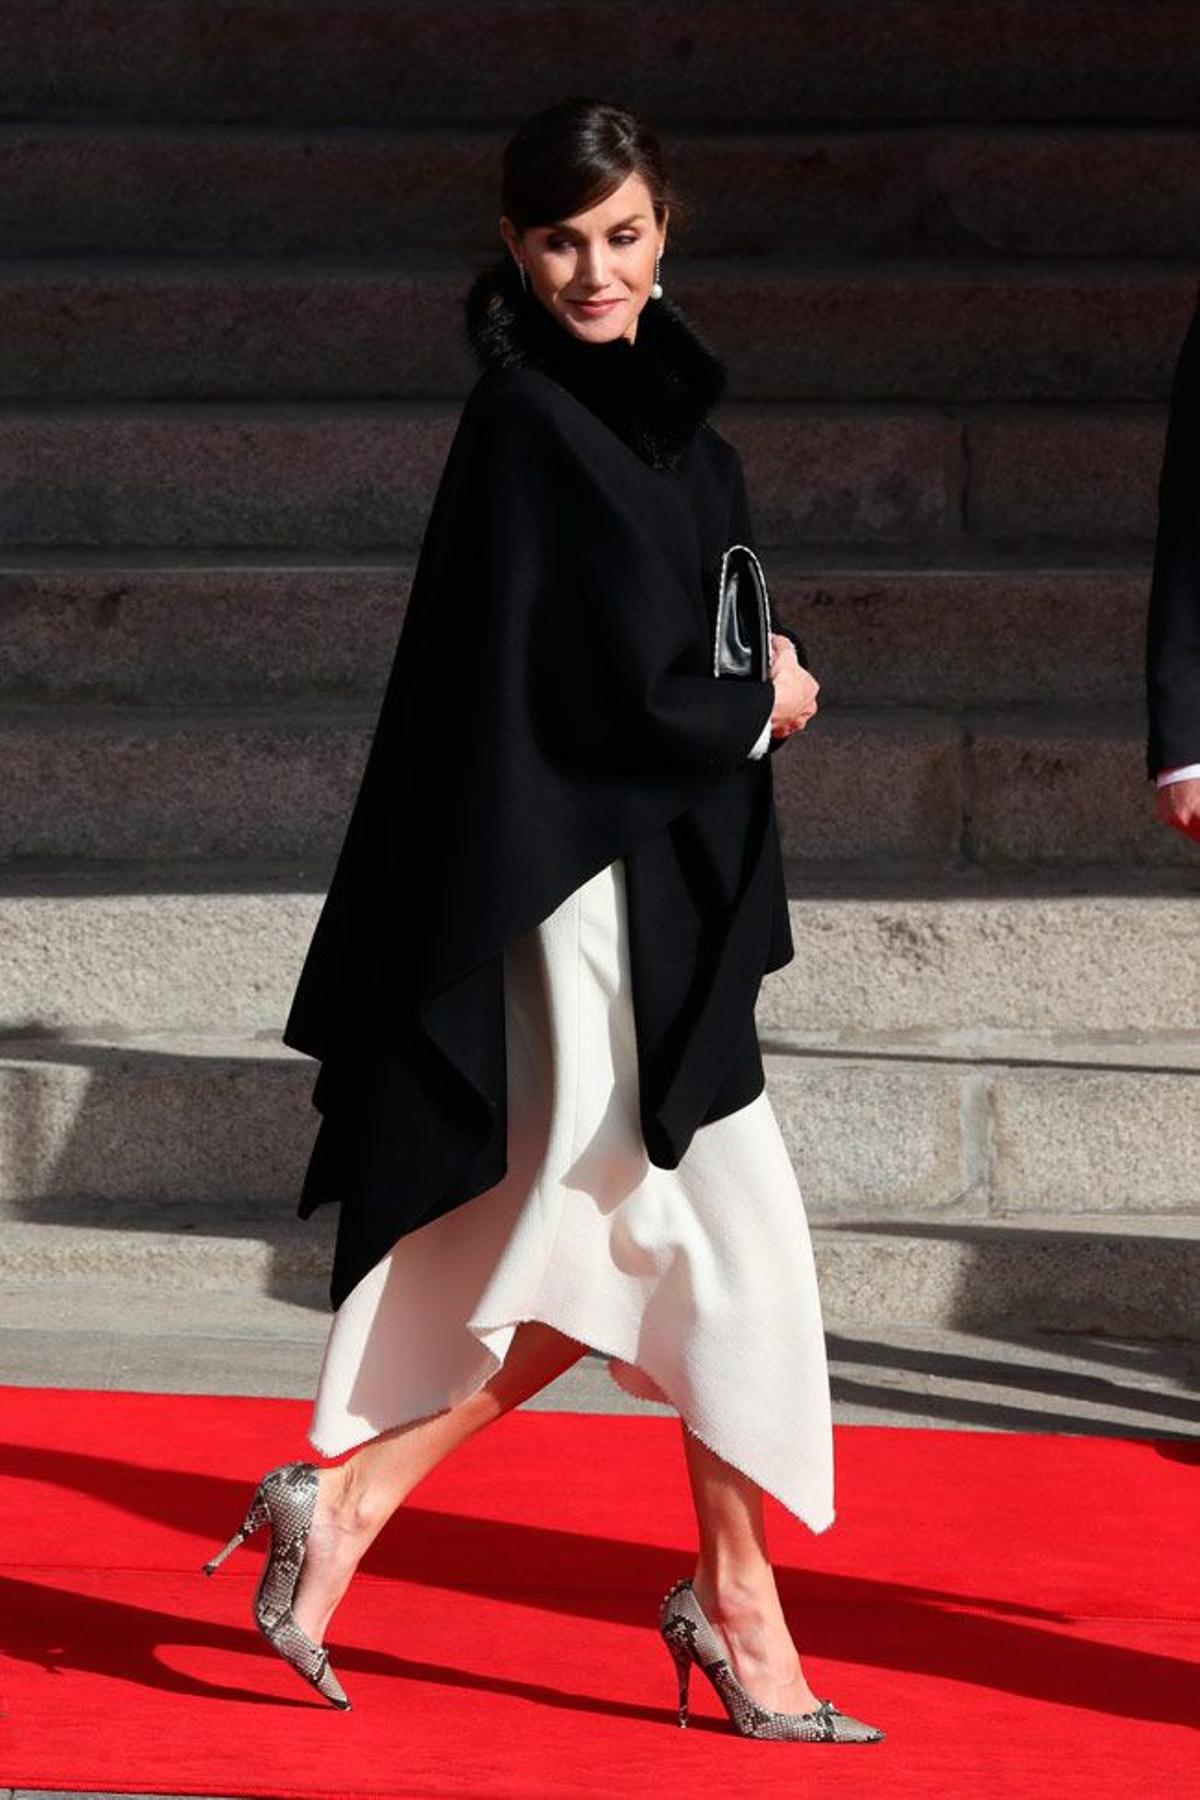 La reina Letizia con vestido blanco, capa negra y accesorios 'animal print' en la apertura de la XIV Legislatura